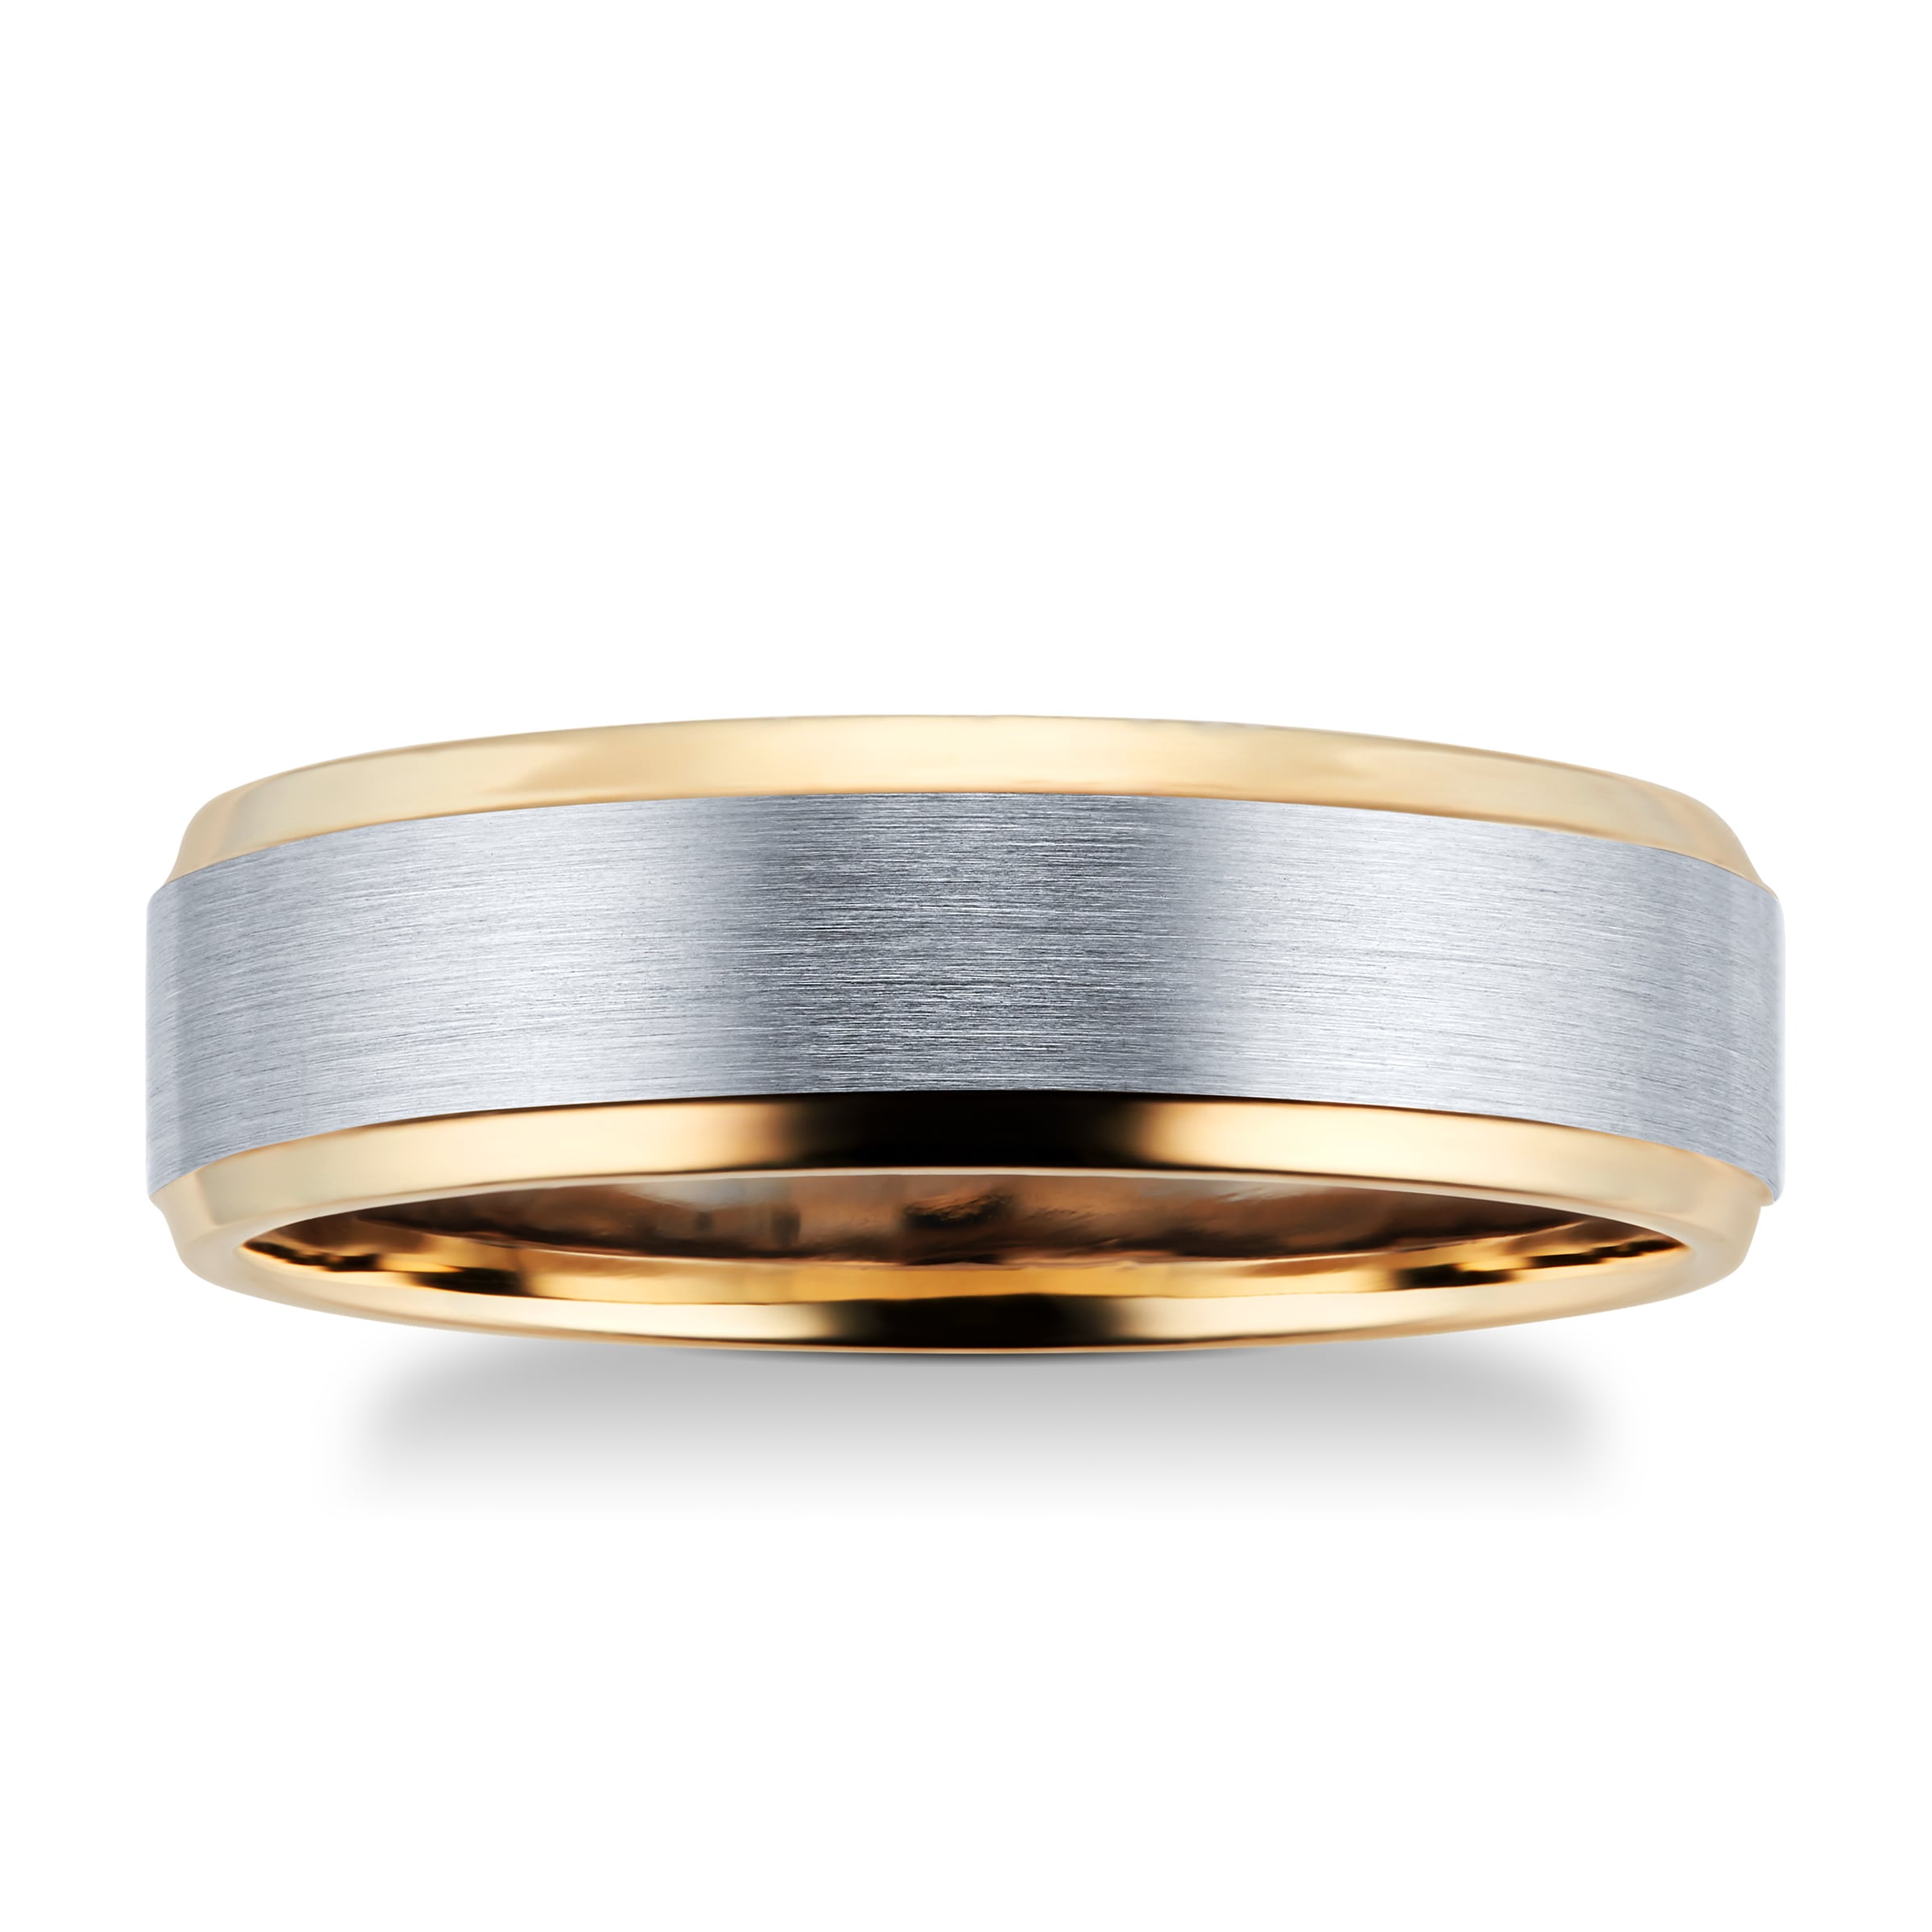 9ct Yellow Gold & Palladium Wedding Ring - Ring Size S